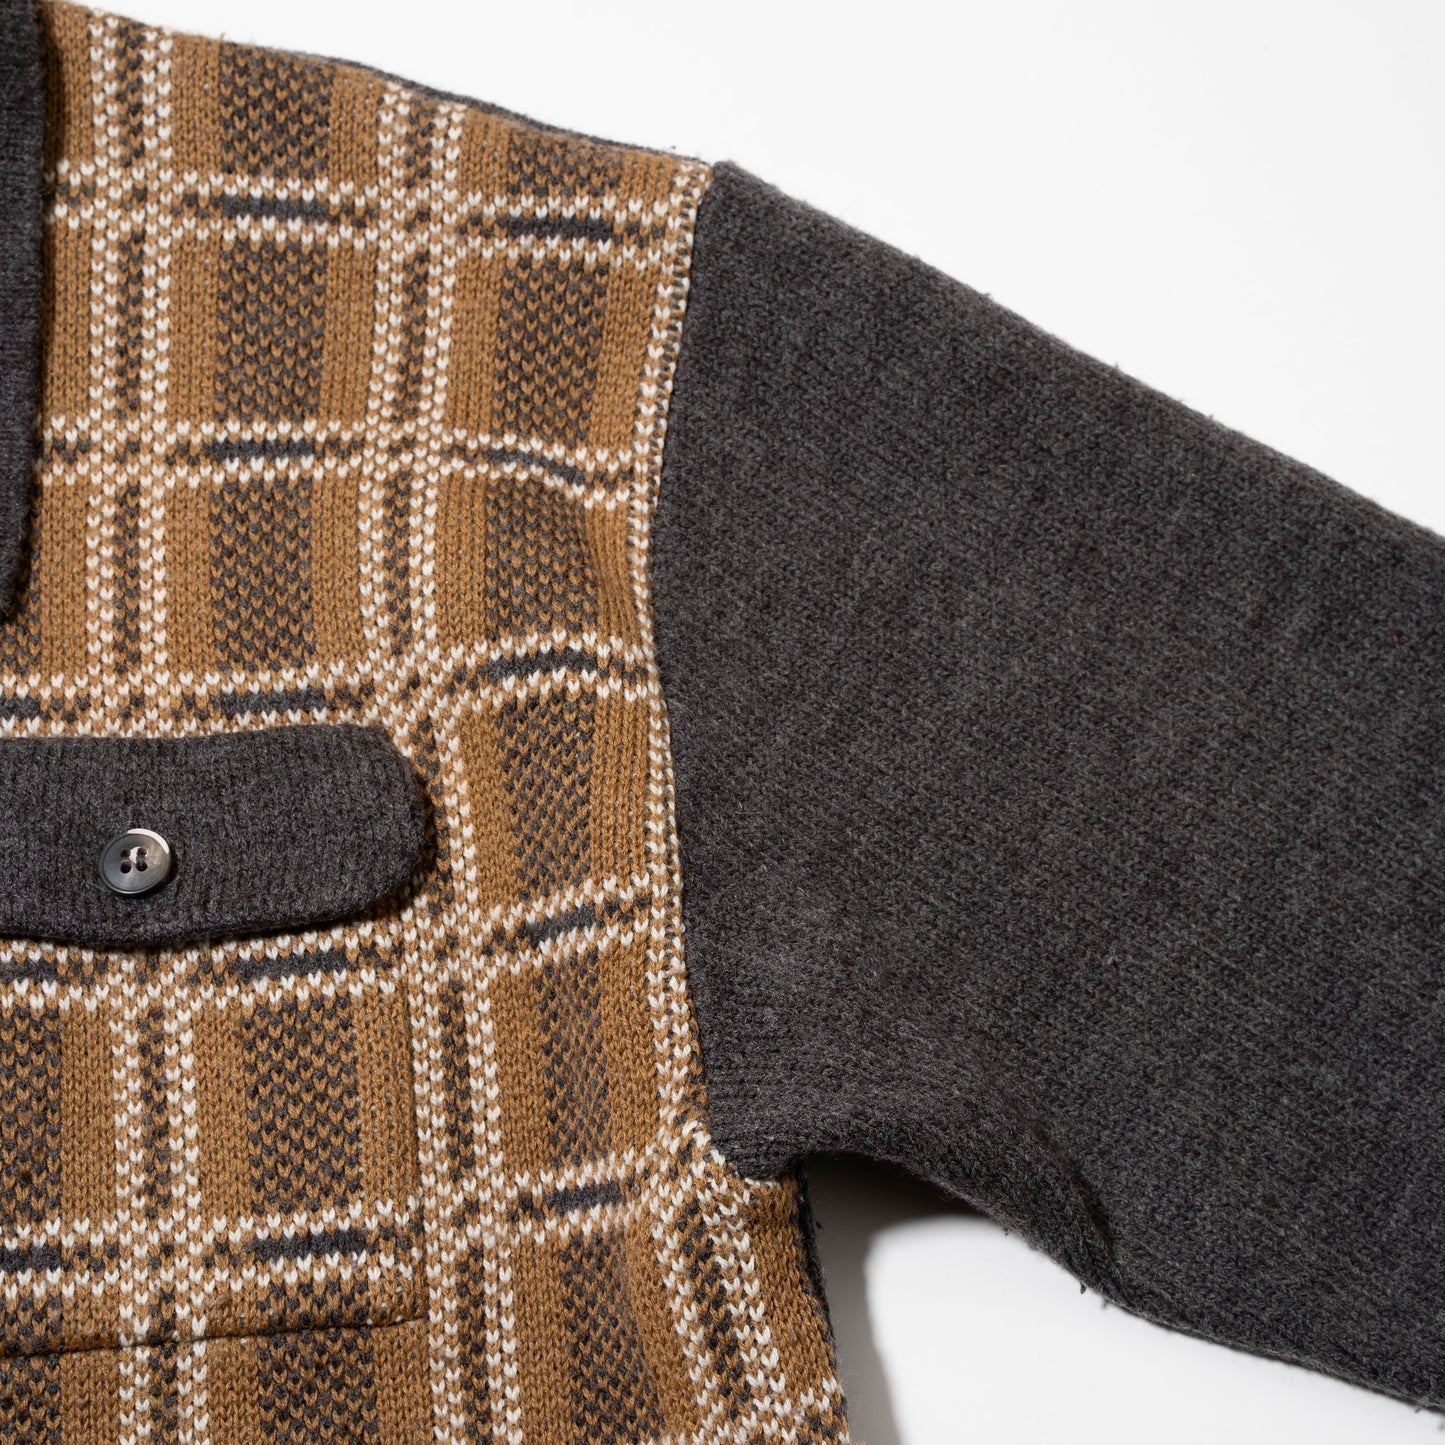 vintage check knit jacket